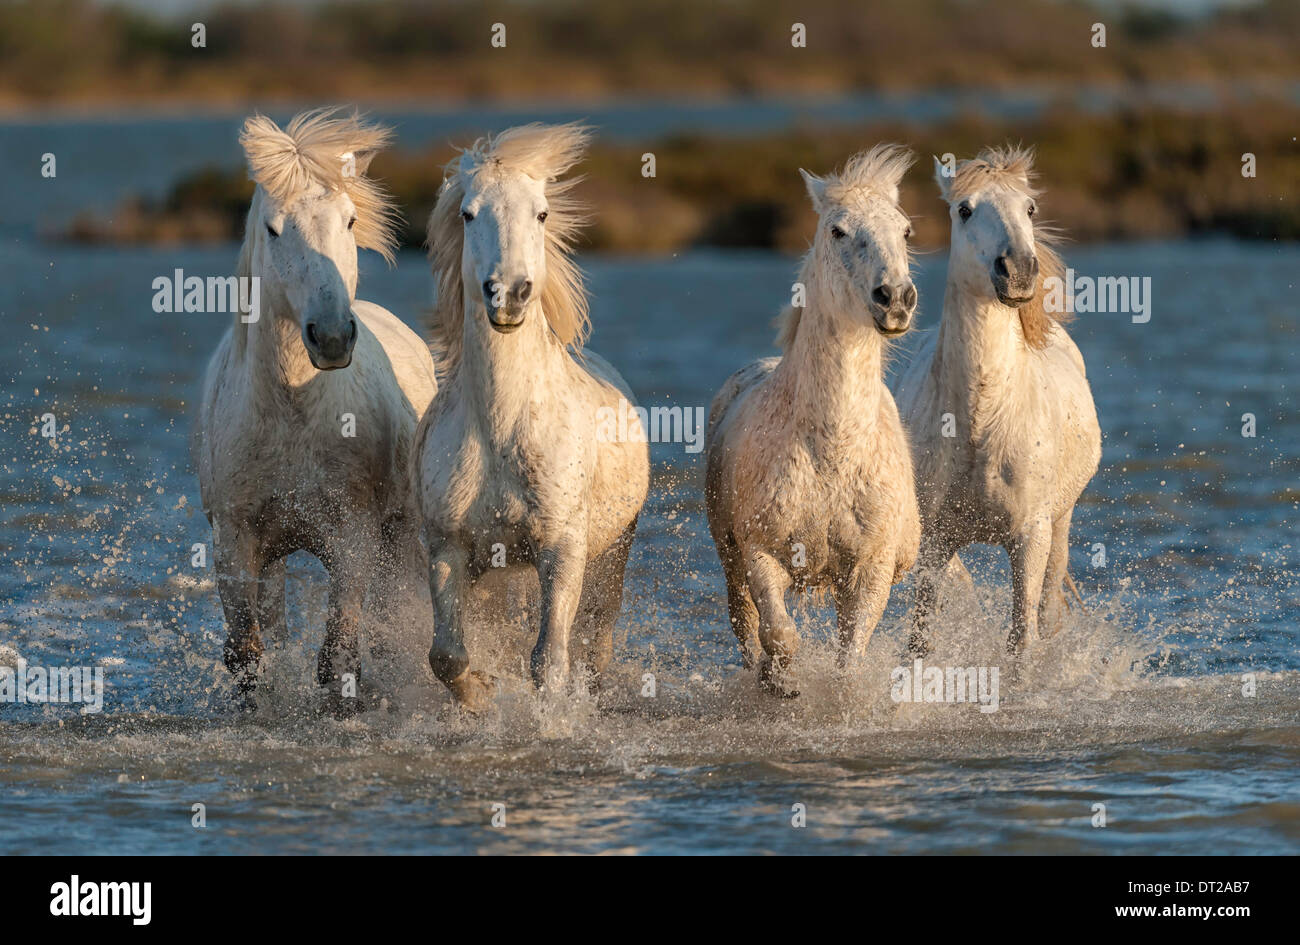 White horses running straight towards camera through blue water Stock Photo